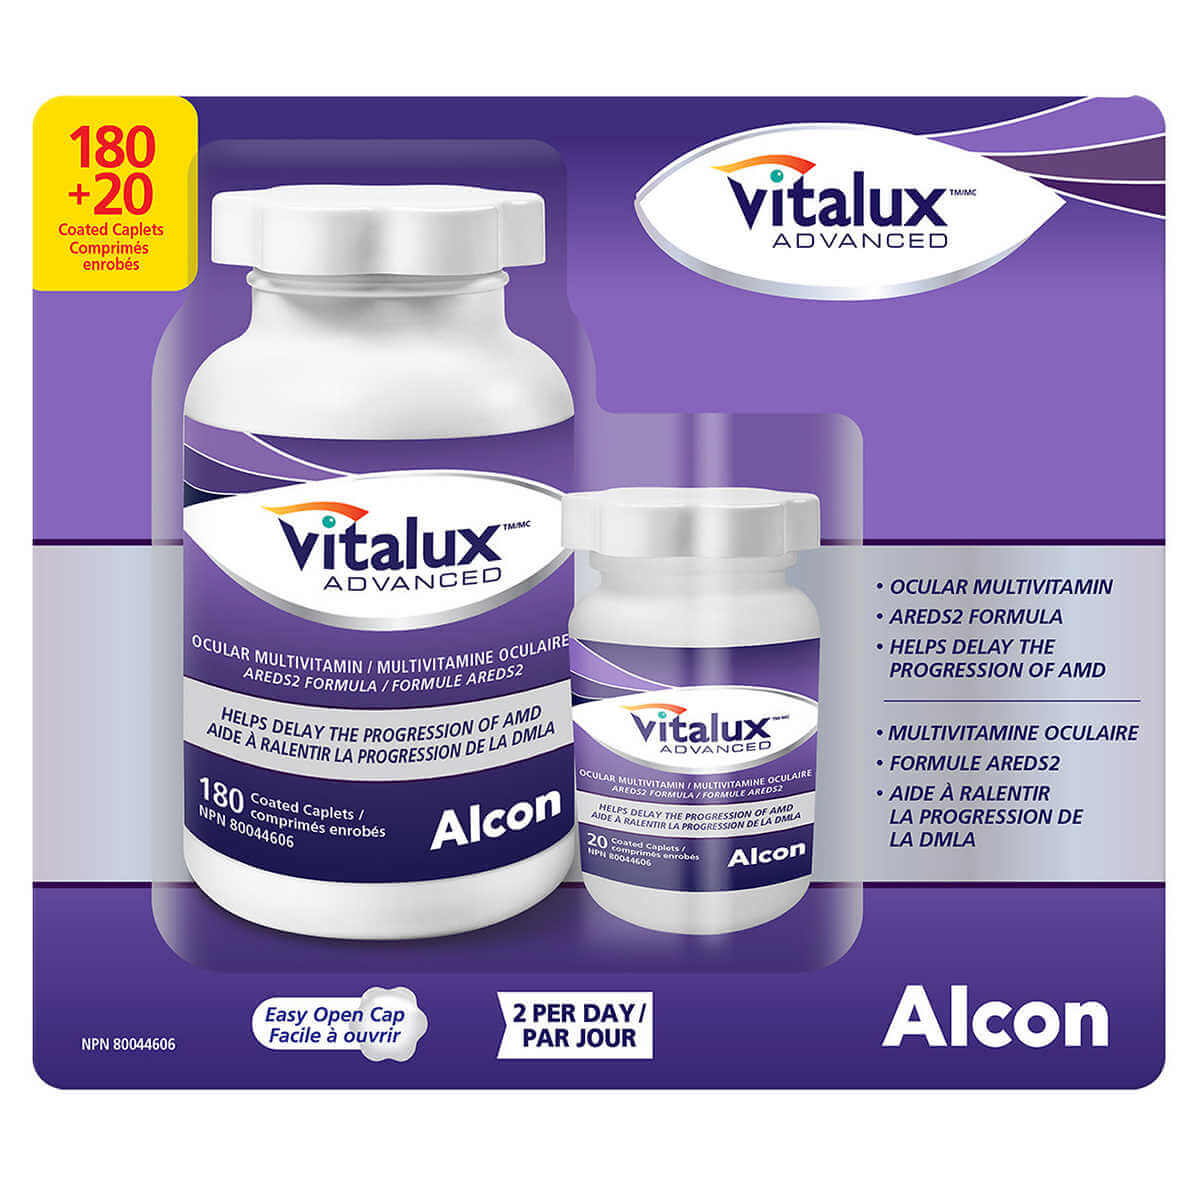 Vitalux Advanced Ocular Multivitamin - 180 + 20 Coated Caplets - Nutrition Plus